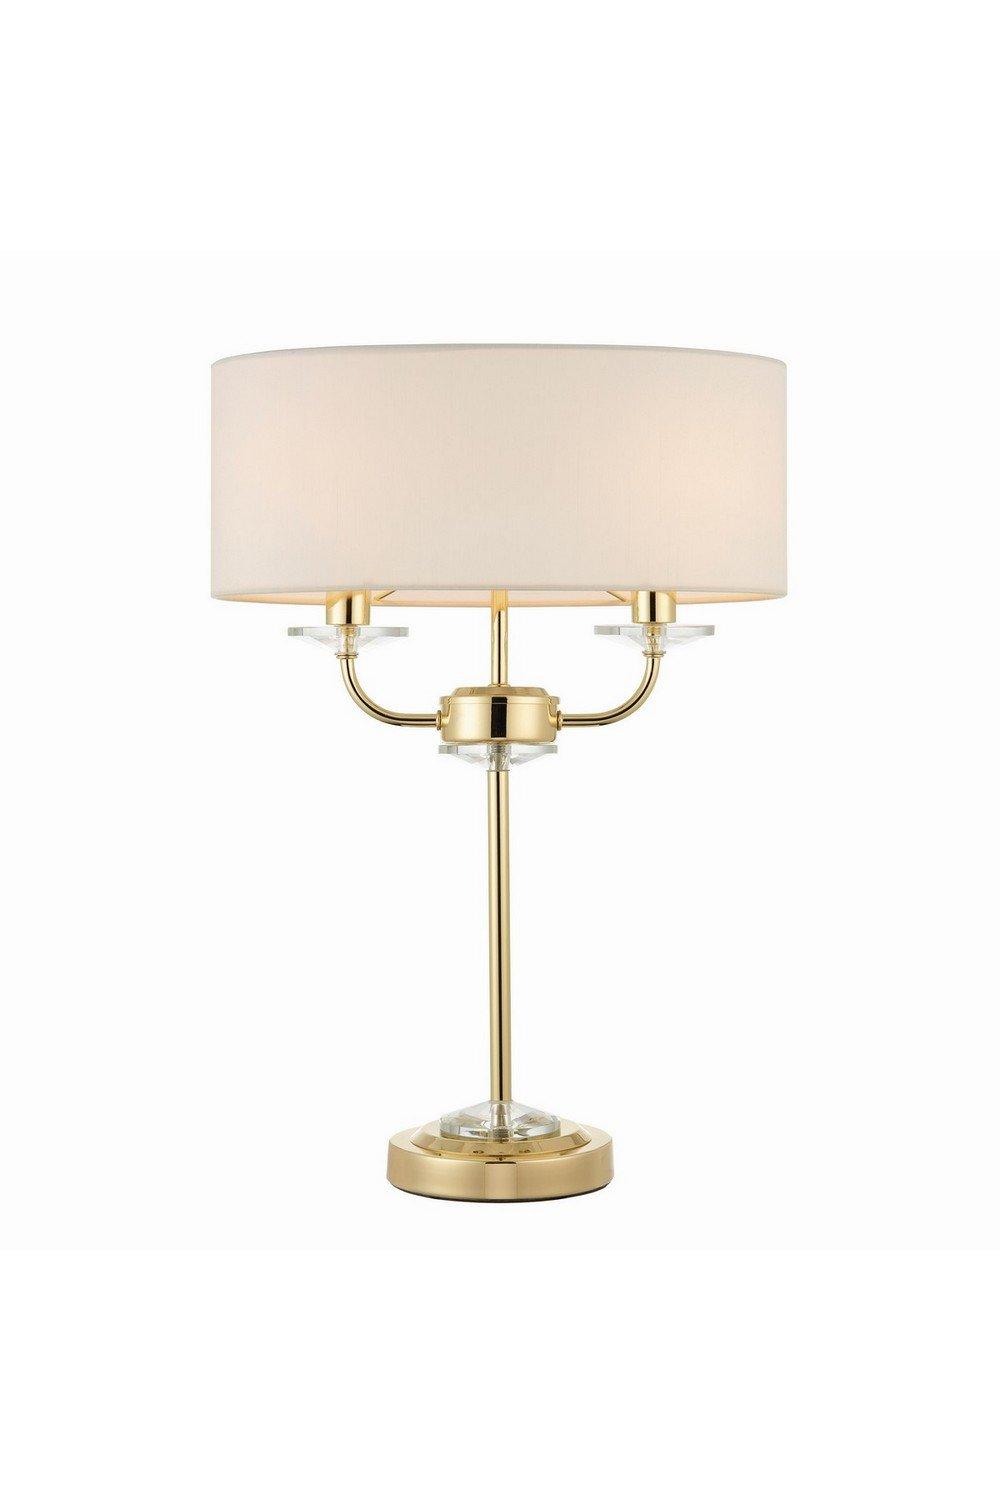 Nixon 2 Light Table Lamp Brass Crystal Glass E14